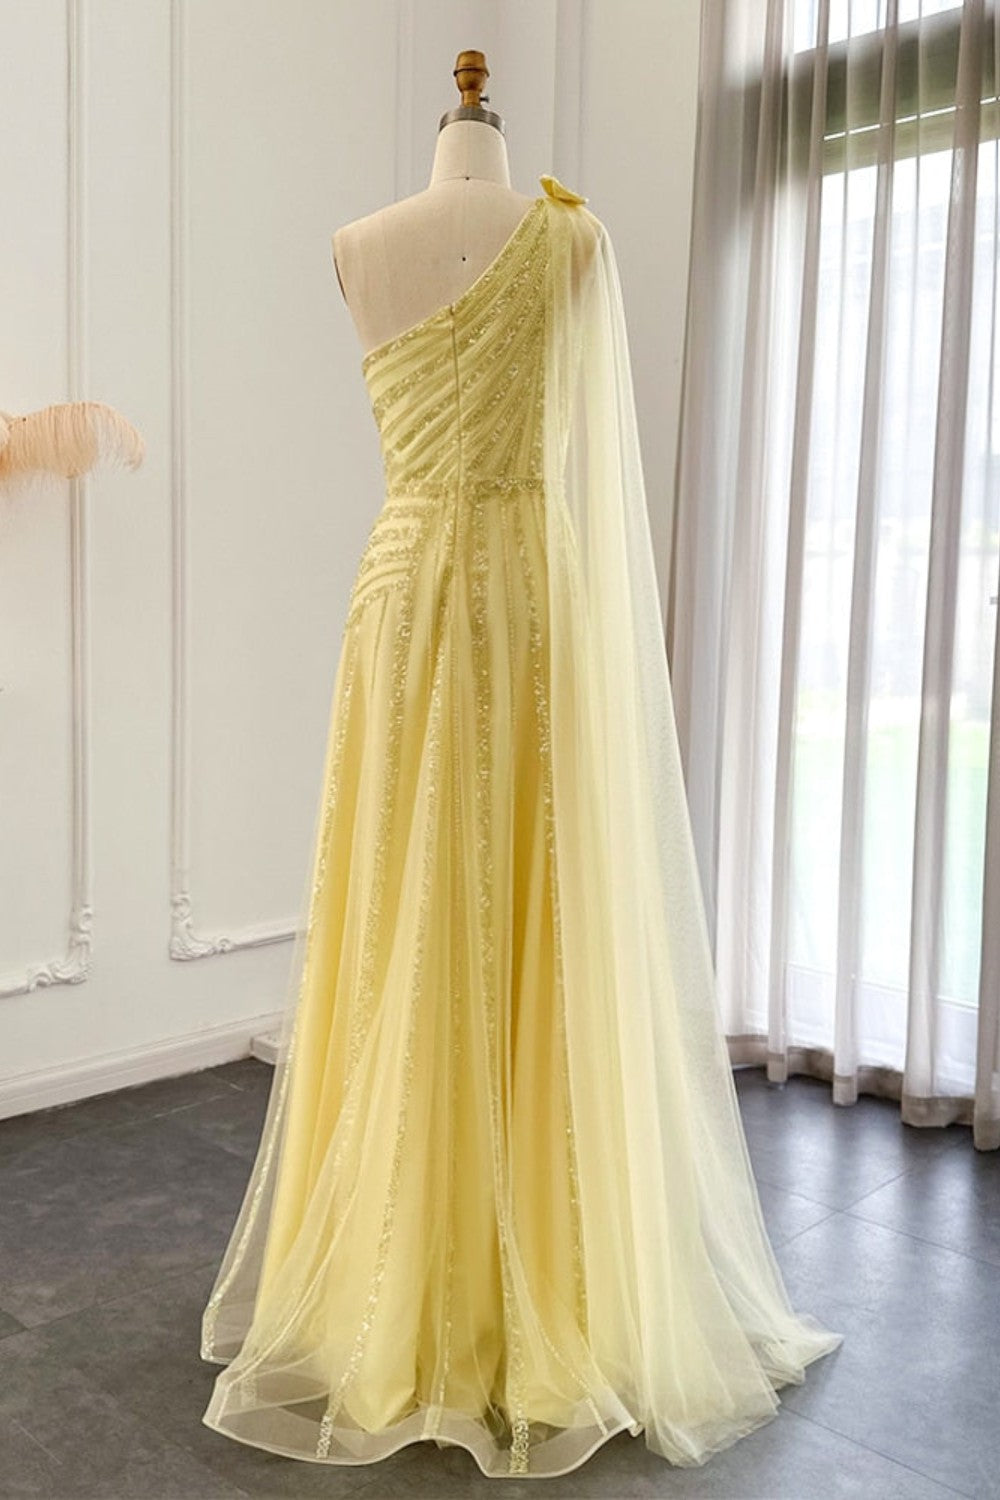 dressimeLuxury One Shoulder Tulle Beaded Slit Prom Dress with Cape 